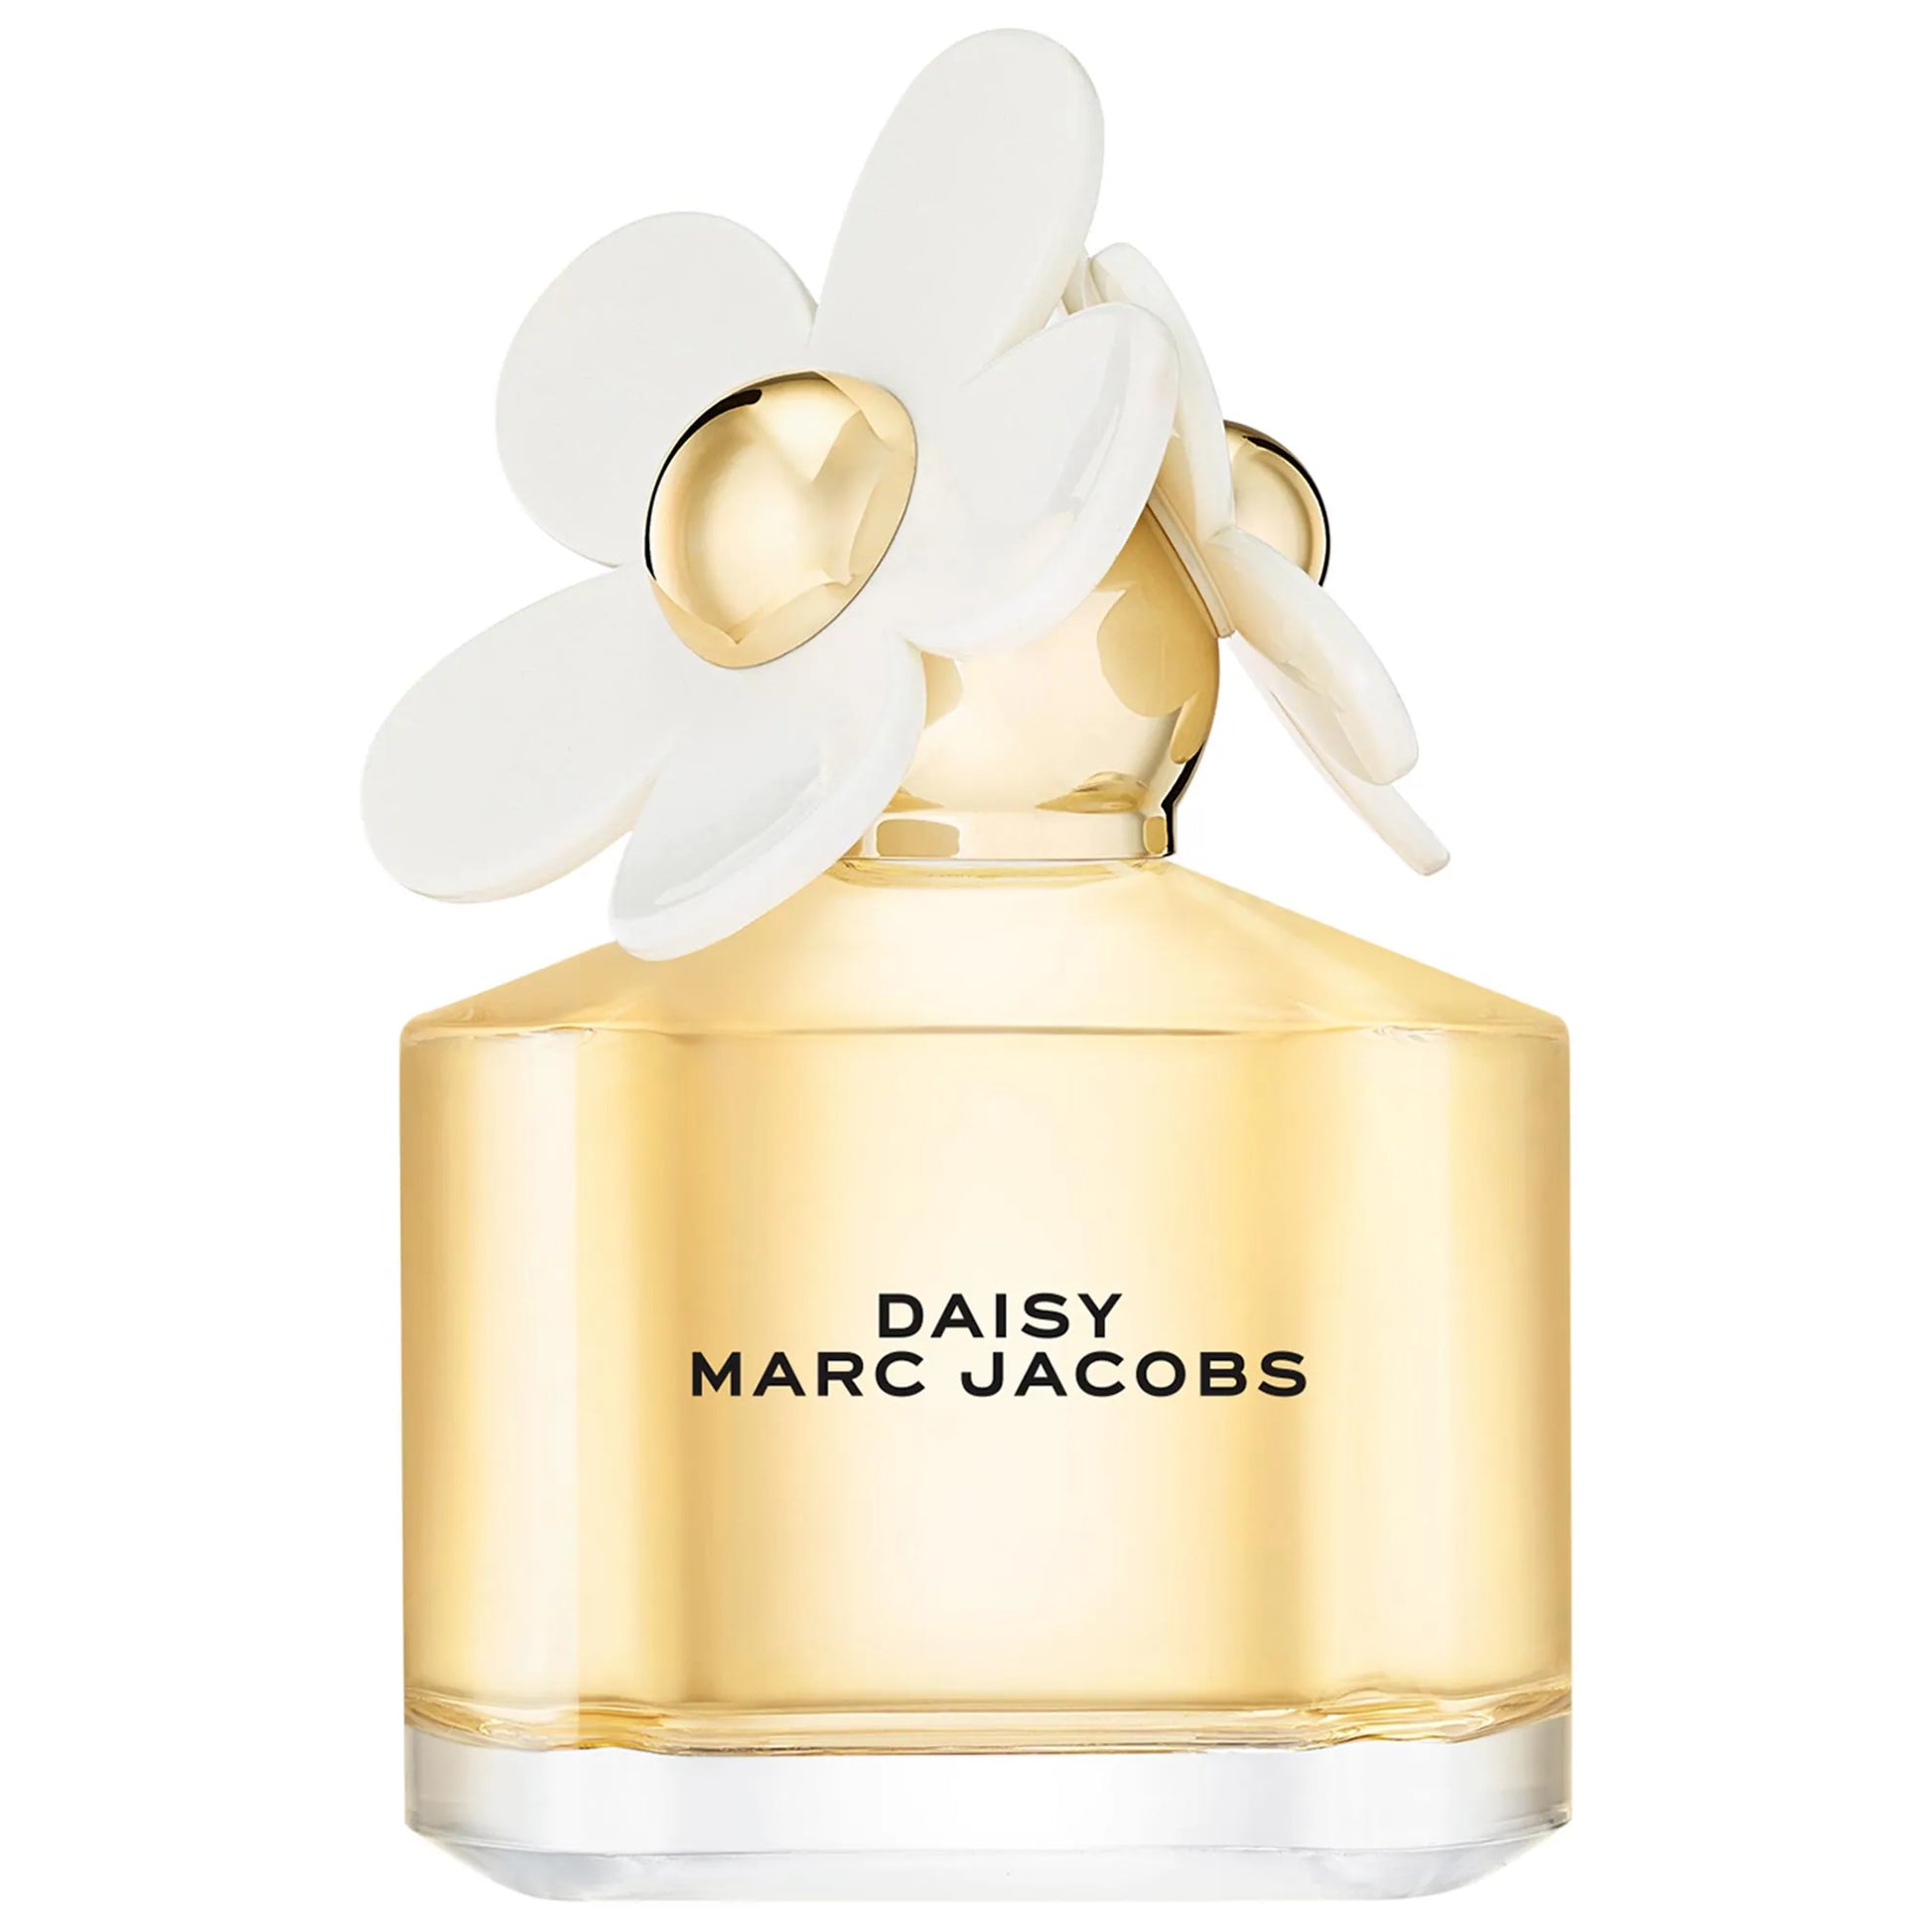 Daisy Marc Jacobs EDT 3.3 fl oz